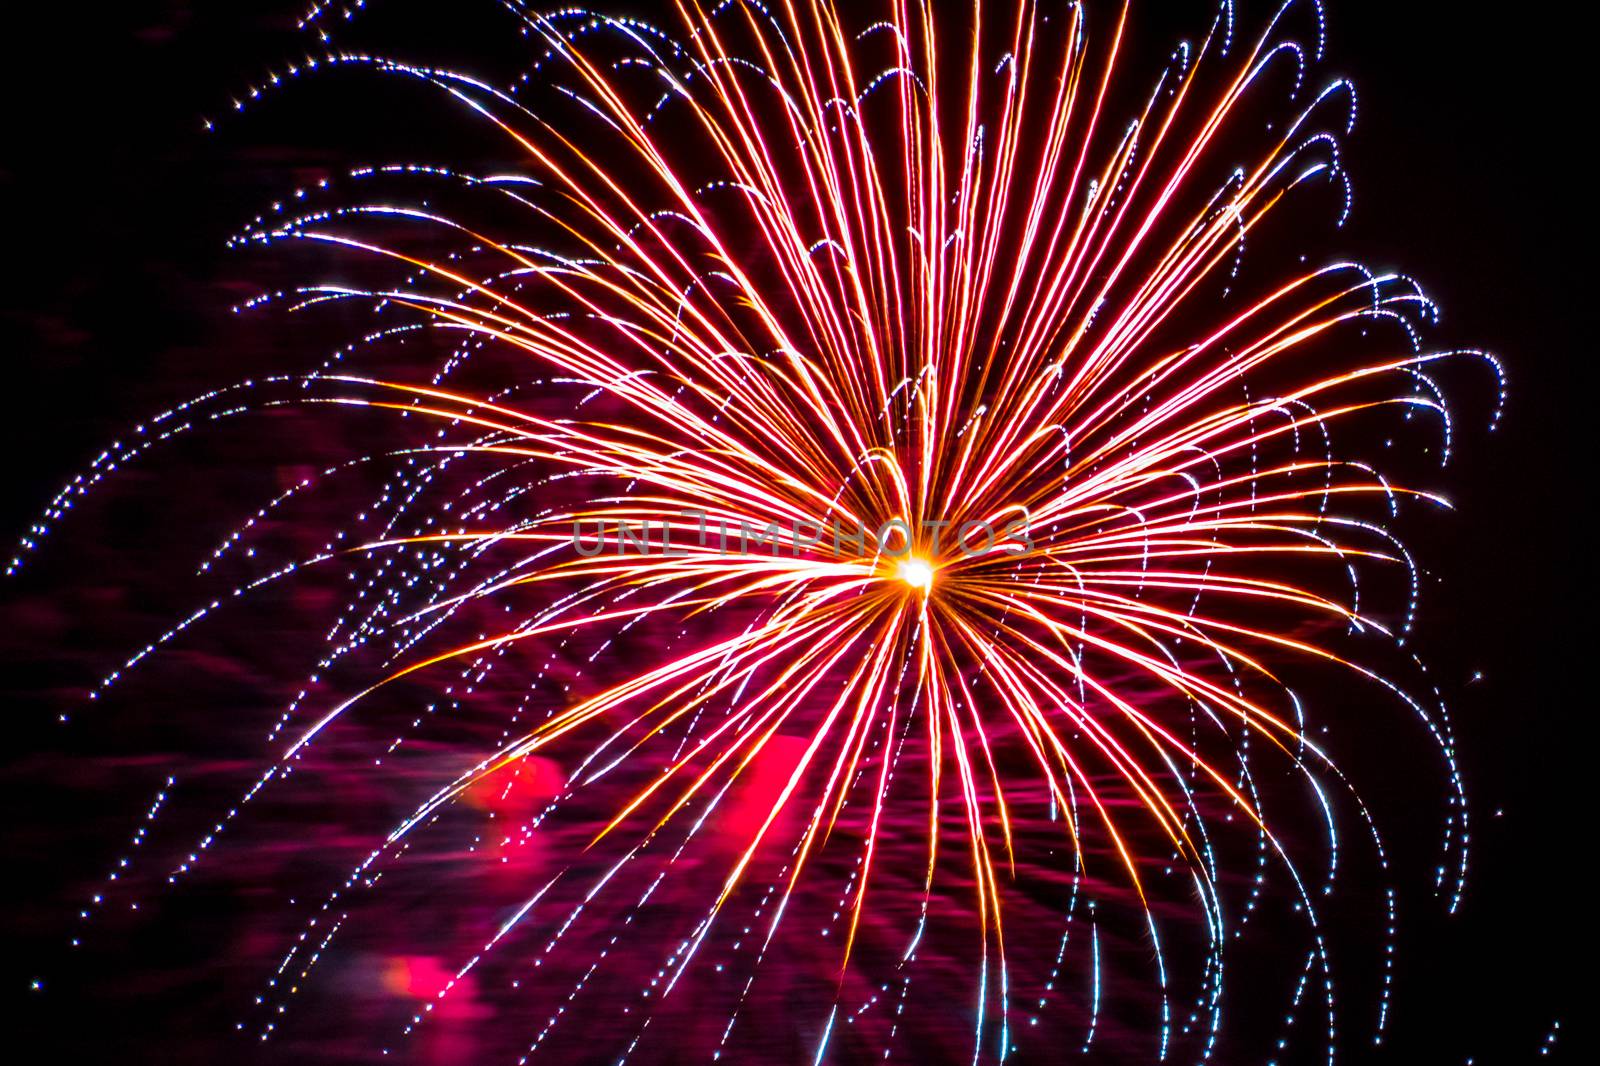 Firework fireworks celebration blue spikes red purple yellow by MXW_Stock